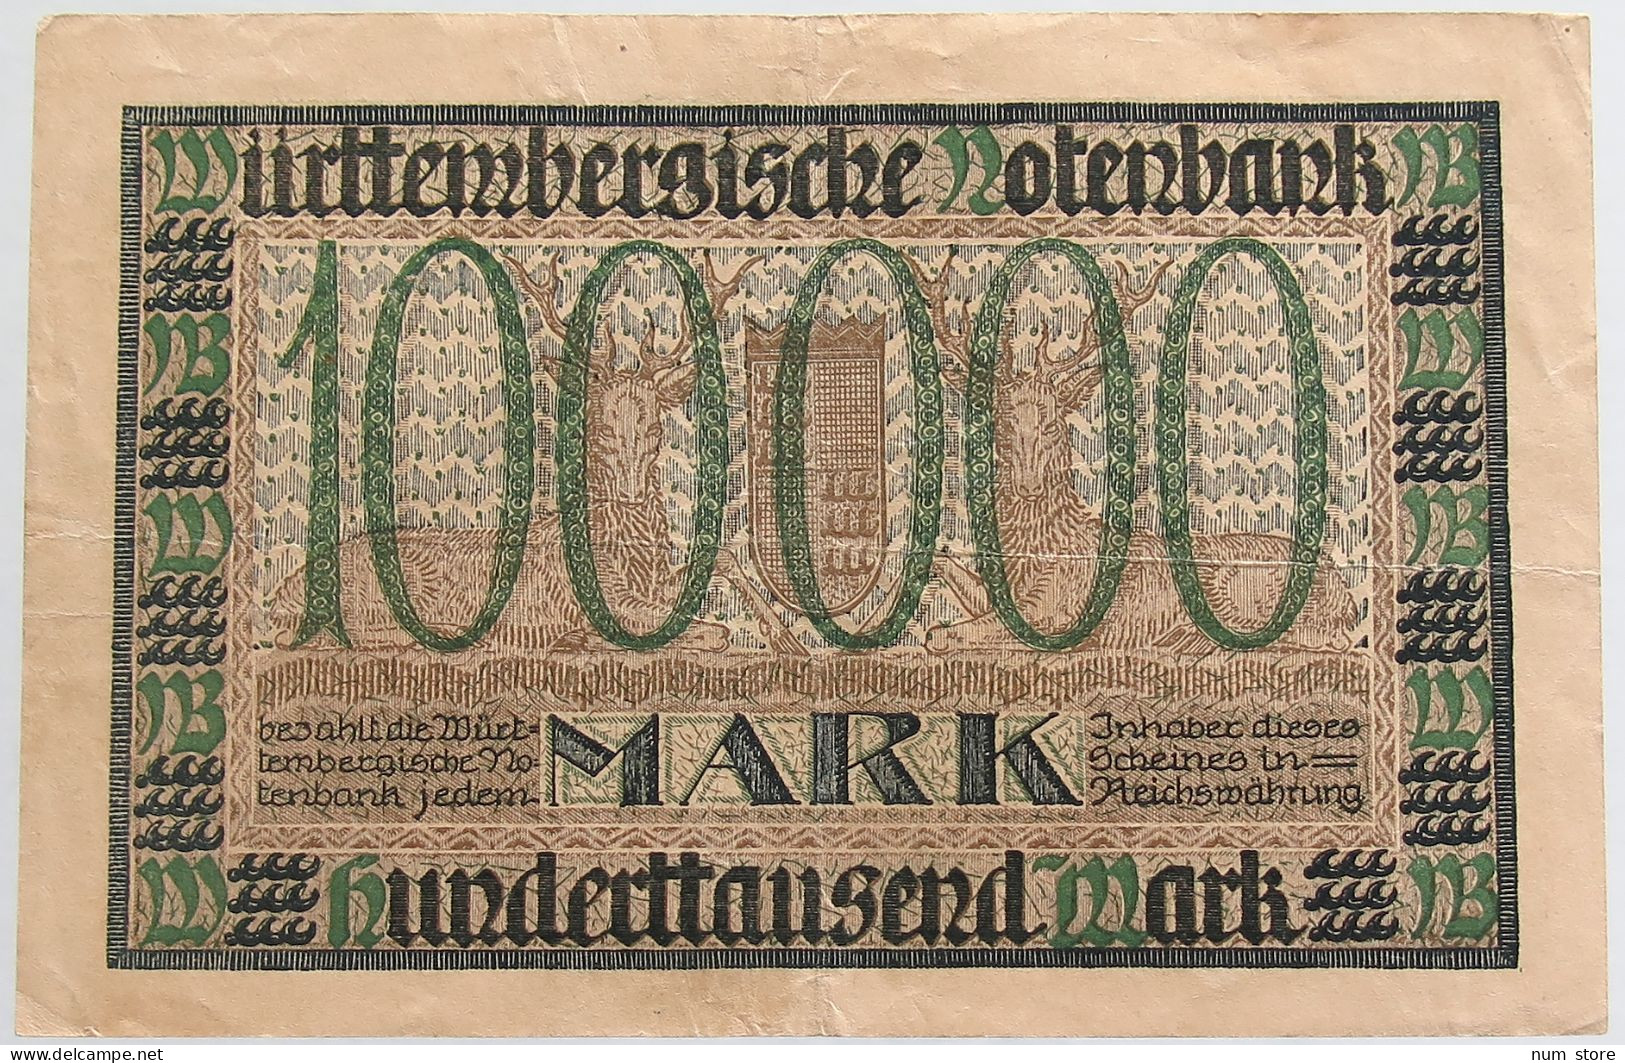 GERMANY 100000 MARK 1923 WURTTEMBERG #alb012 0021 - 100000 Mark